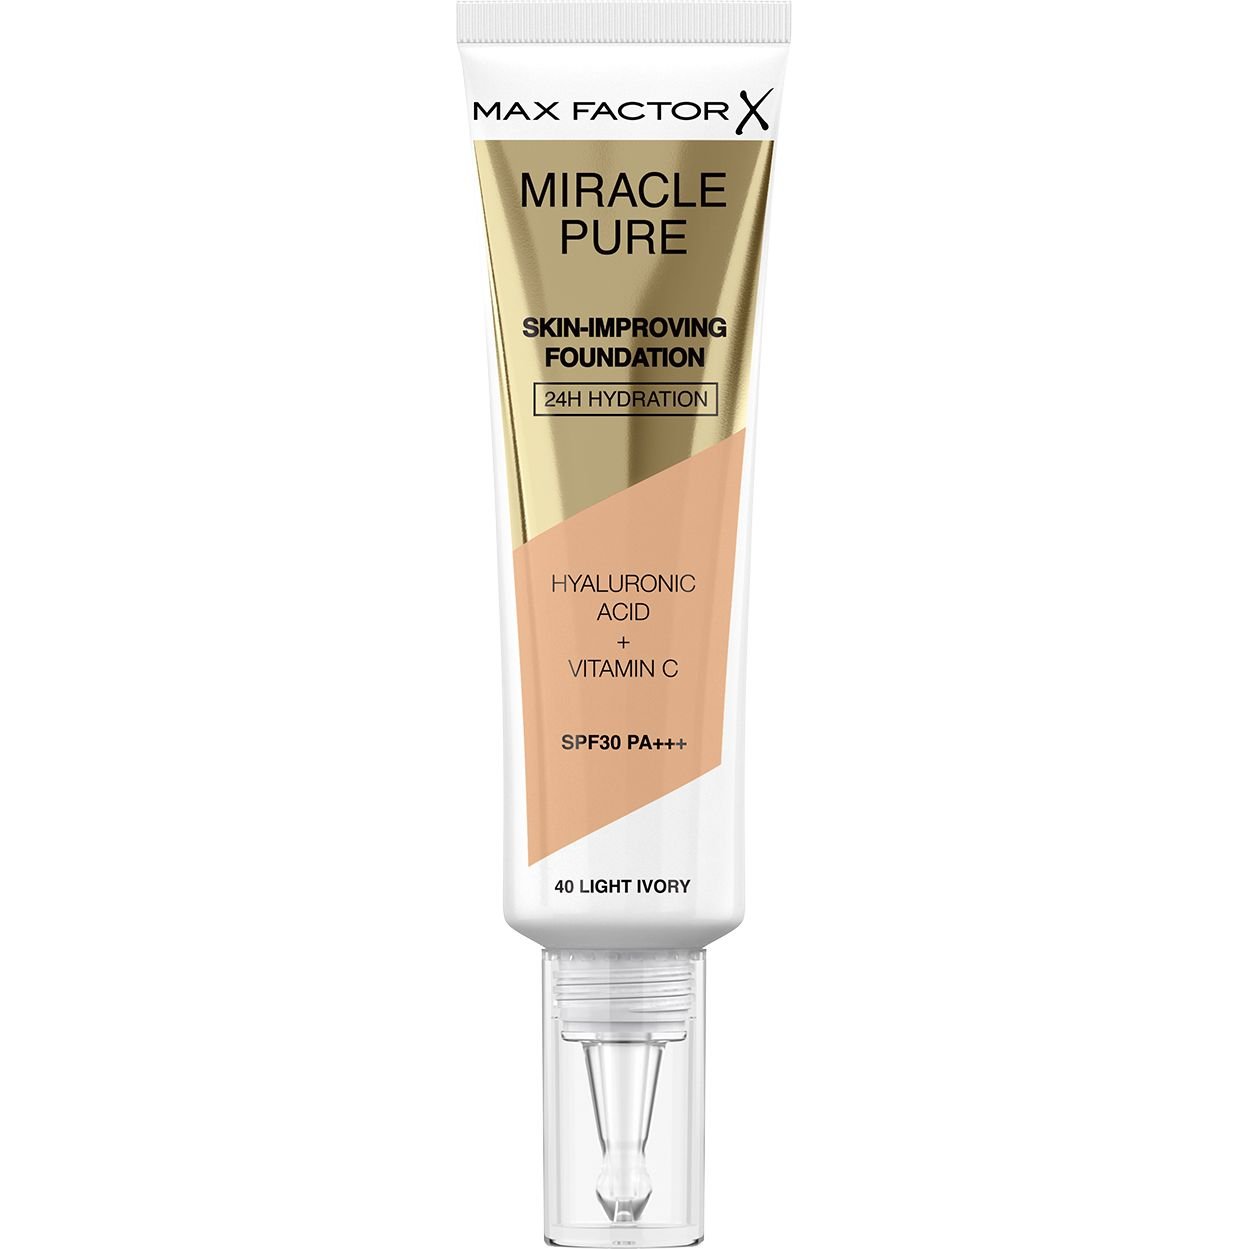 Тональная основа Max Factor Miracle Pure Skin-Improving Foundation SPF30 тон 040 (Light Ivory) 30 мл - фото 1